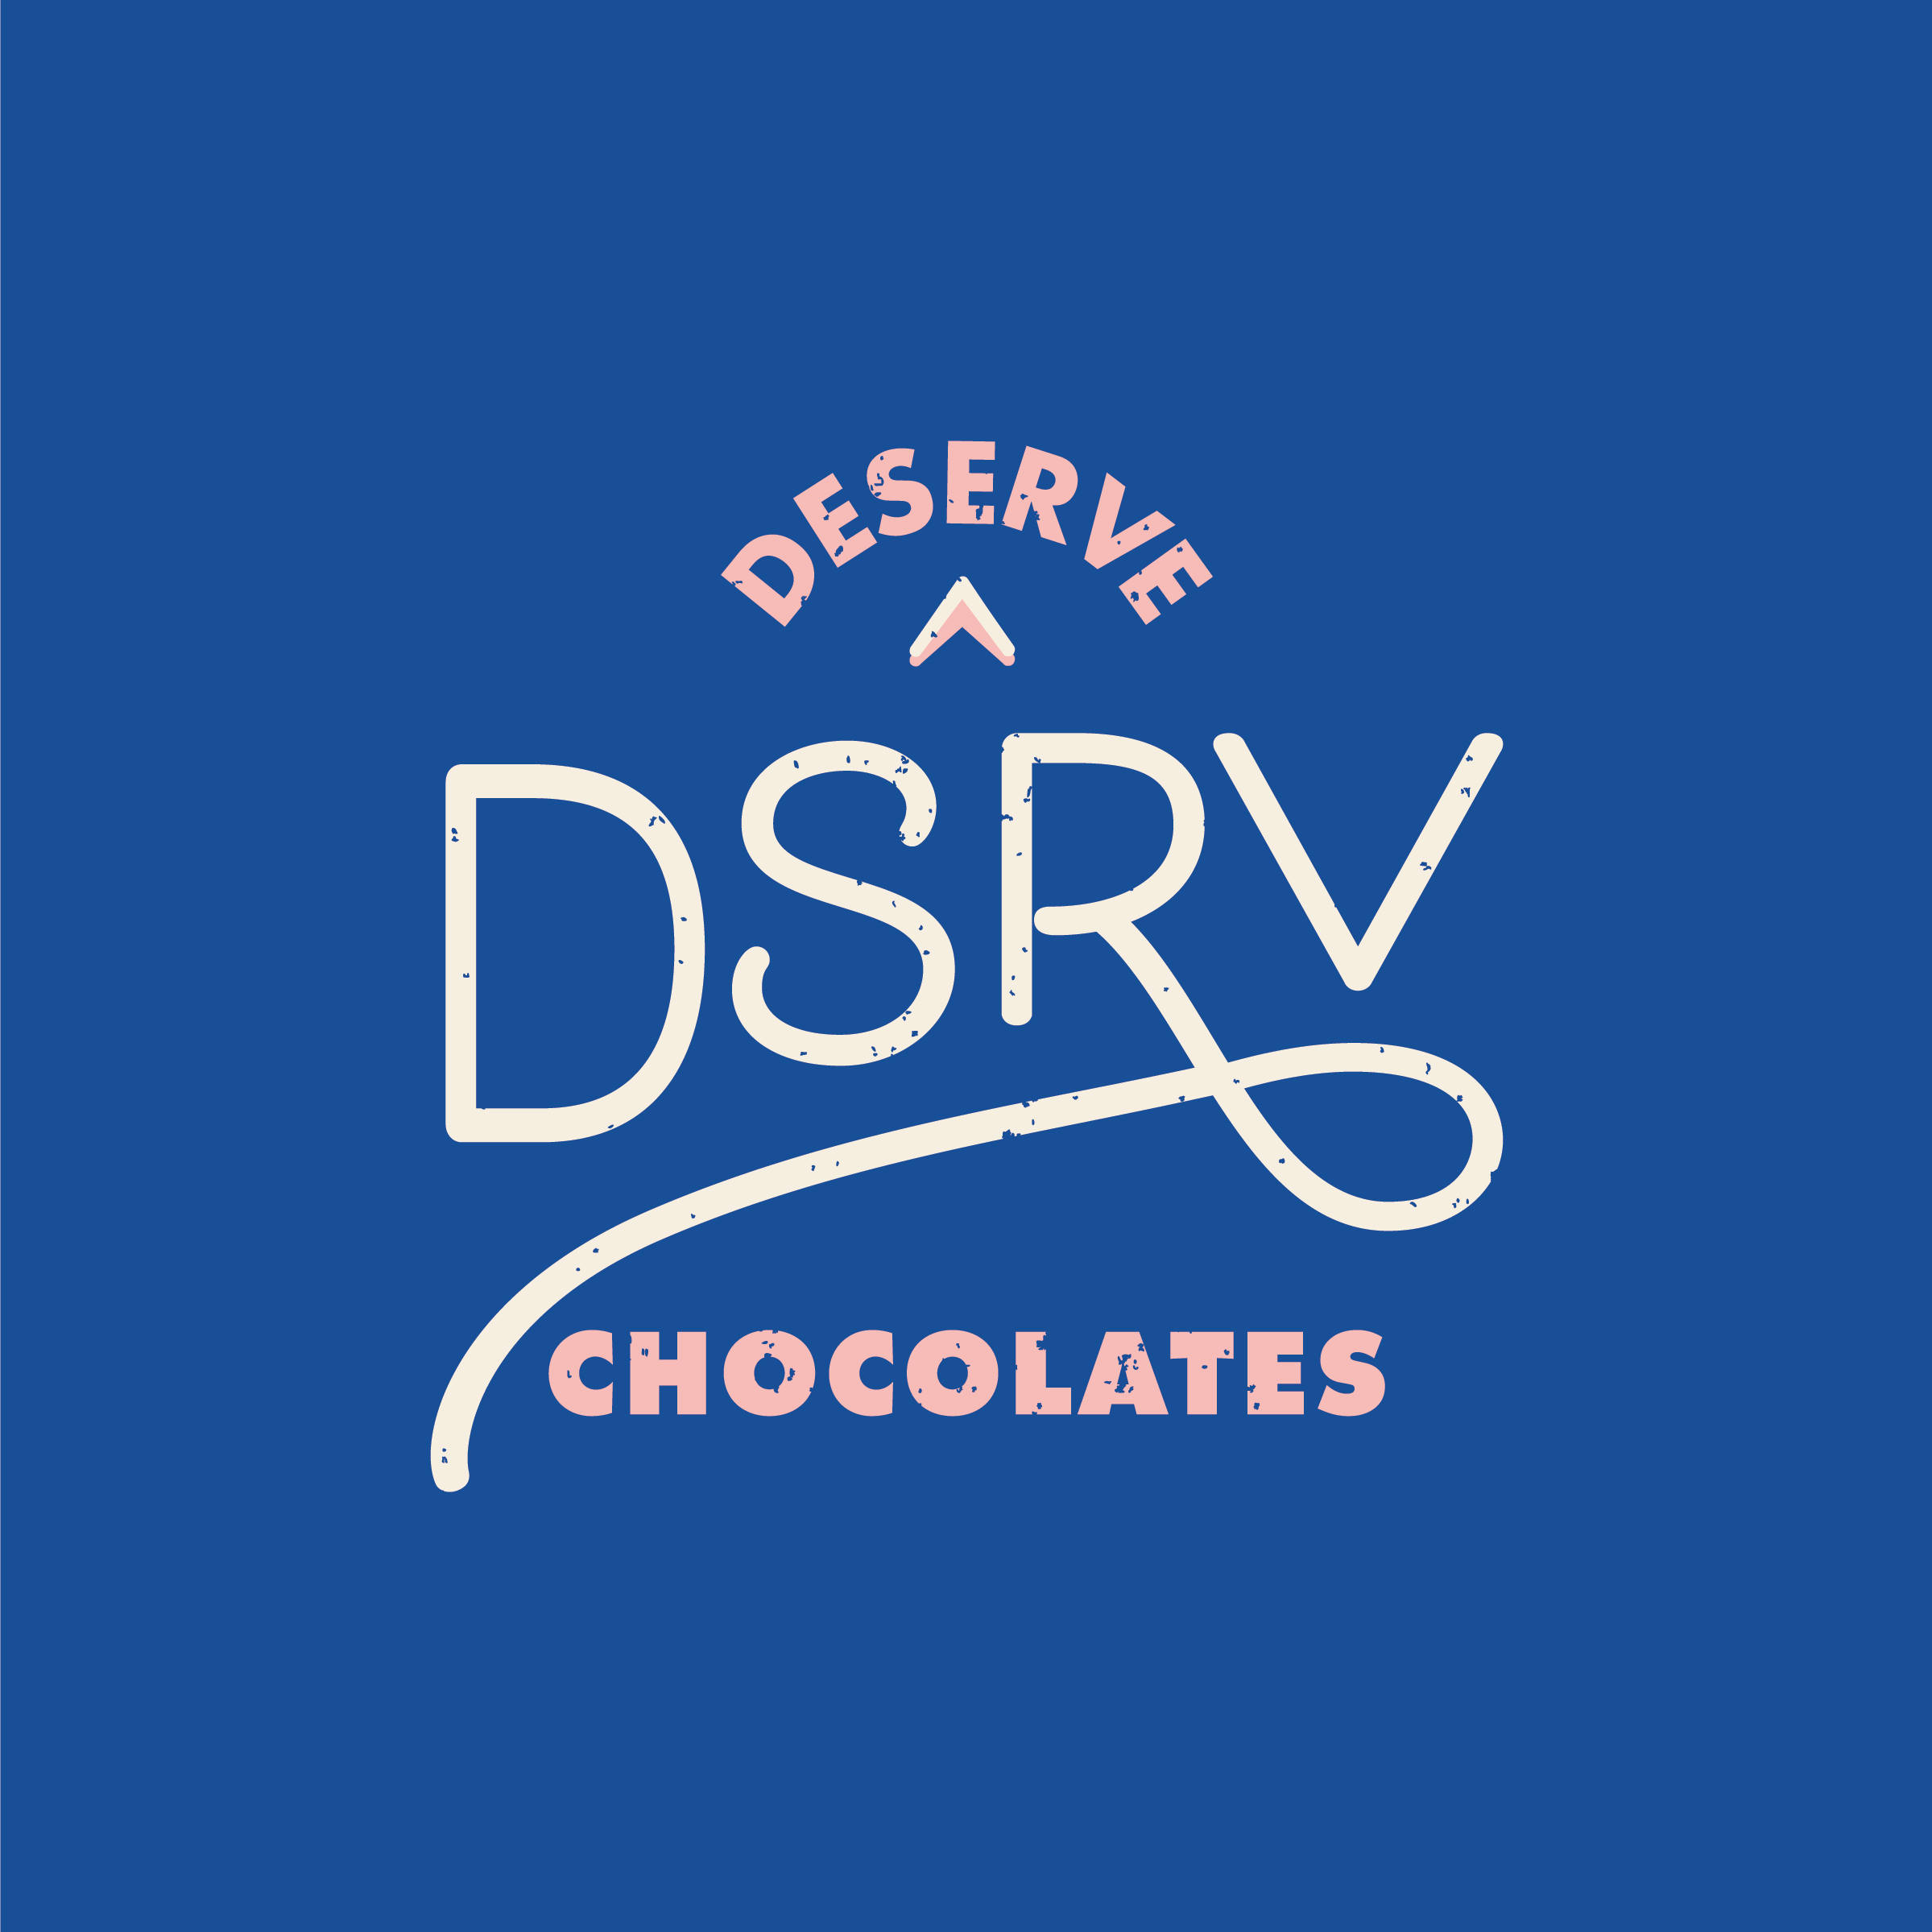 DSRV Chocolates